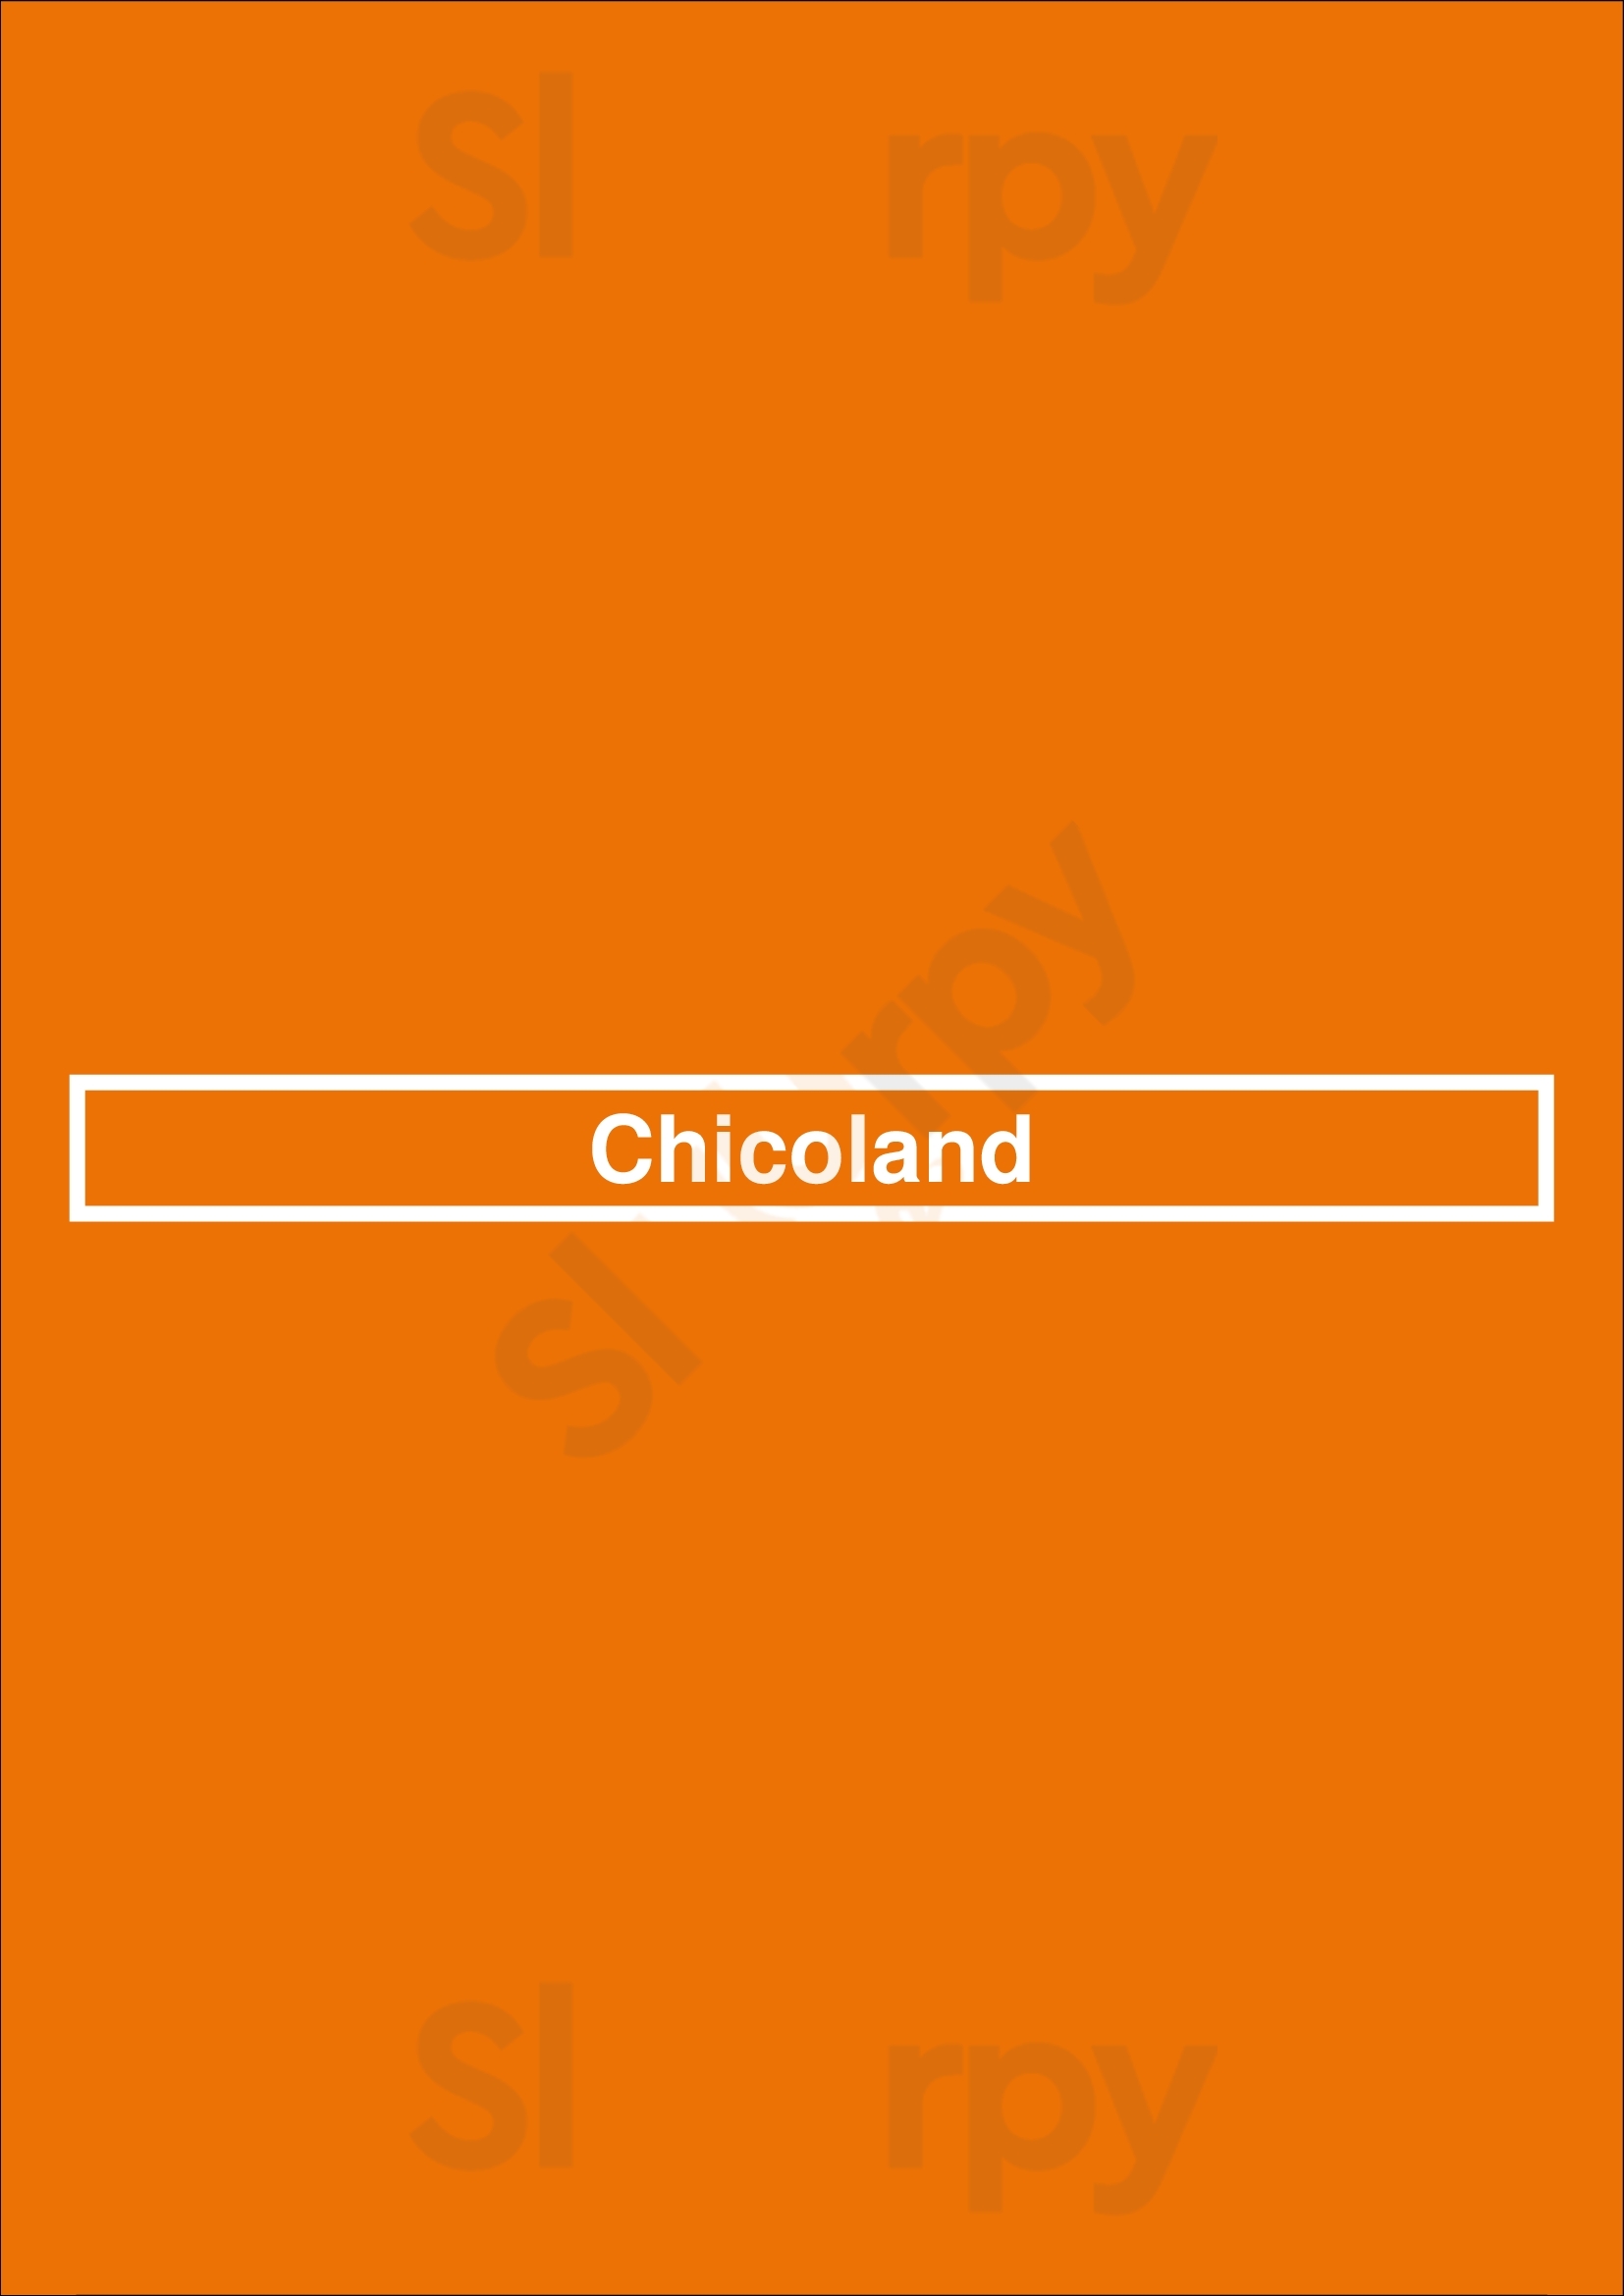 Chicoland Paignton Menu - 1